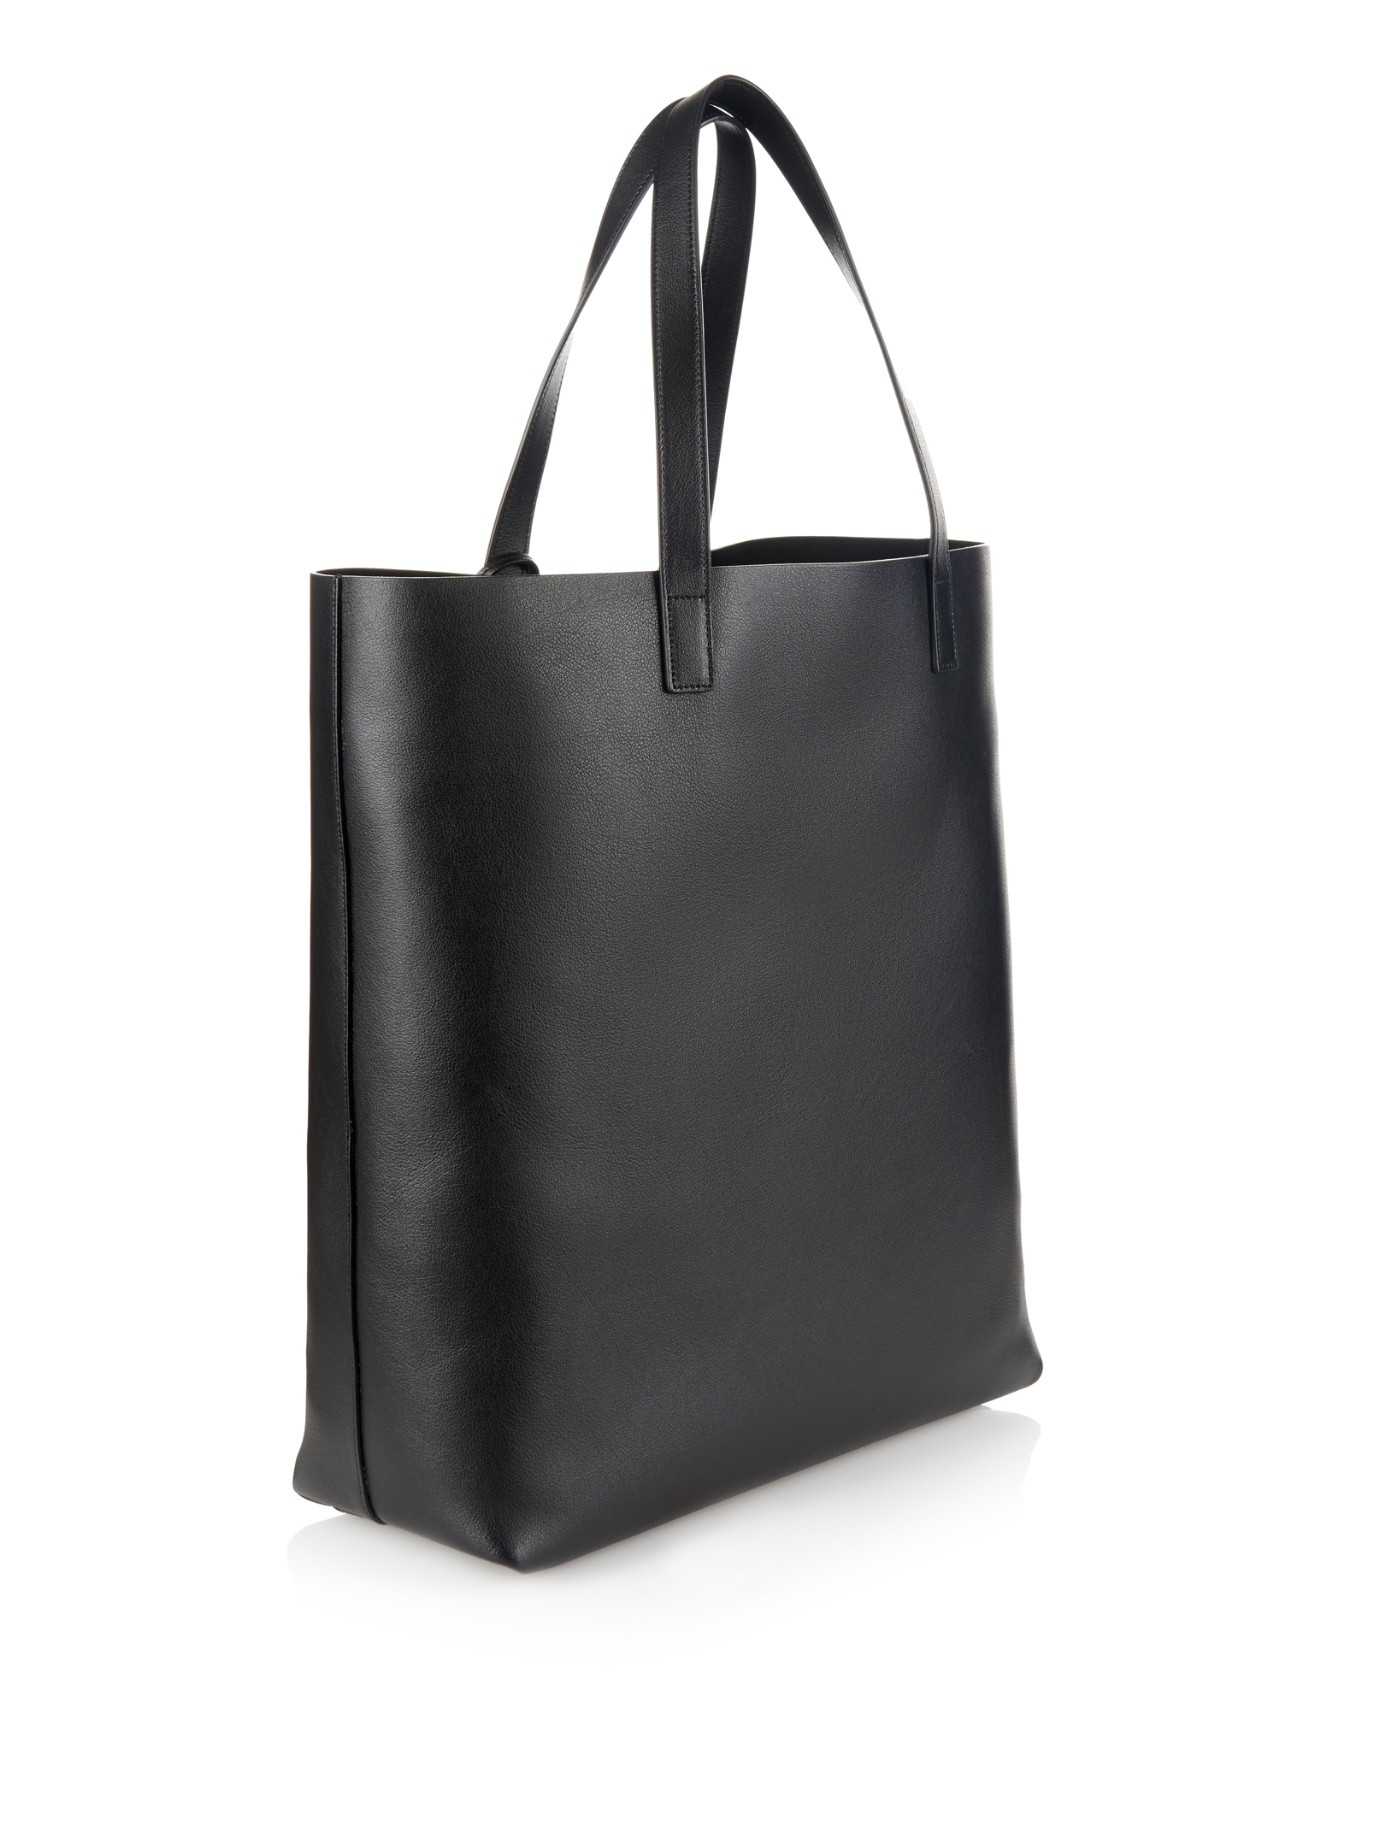 Saint Laurent Monogram Leather Shopper Bag in Black for Men - Lyst